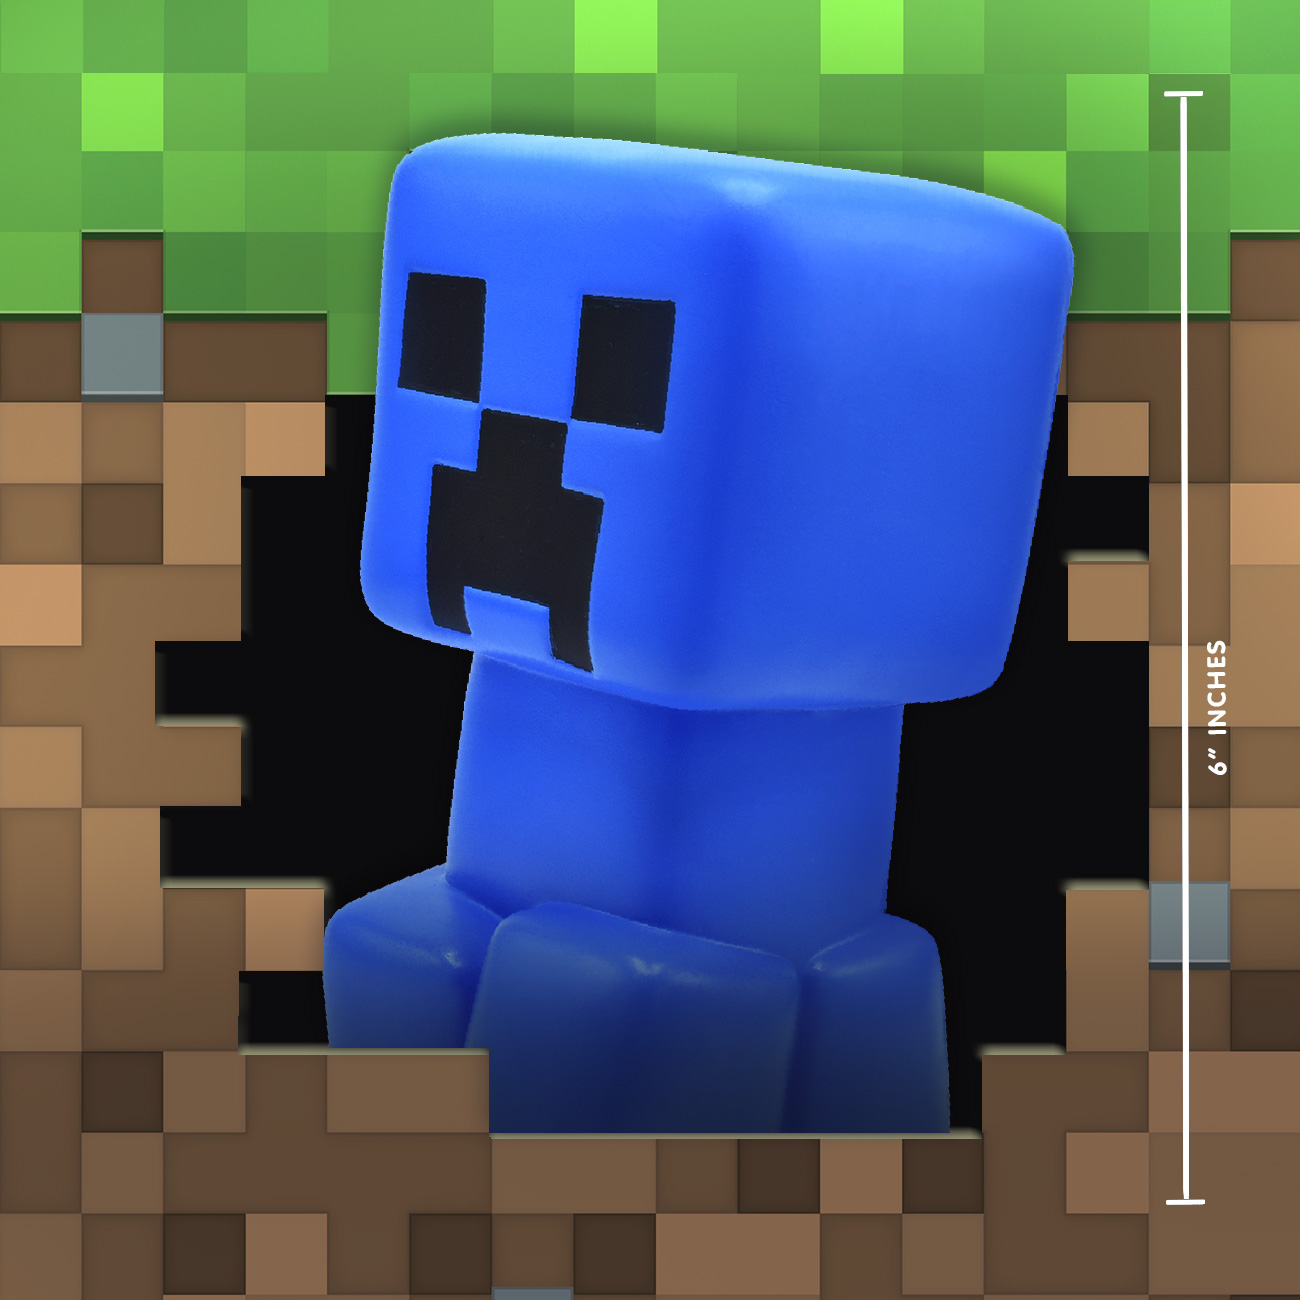 minecraft blue creeper